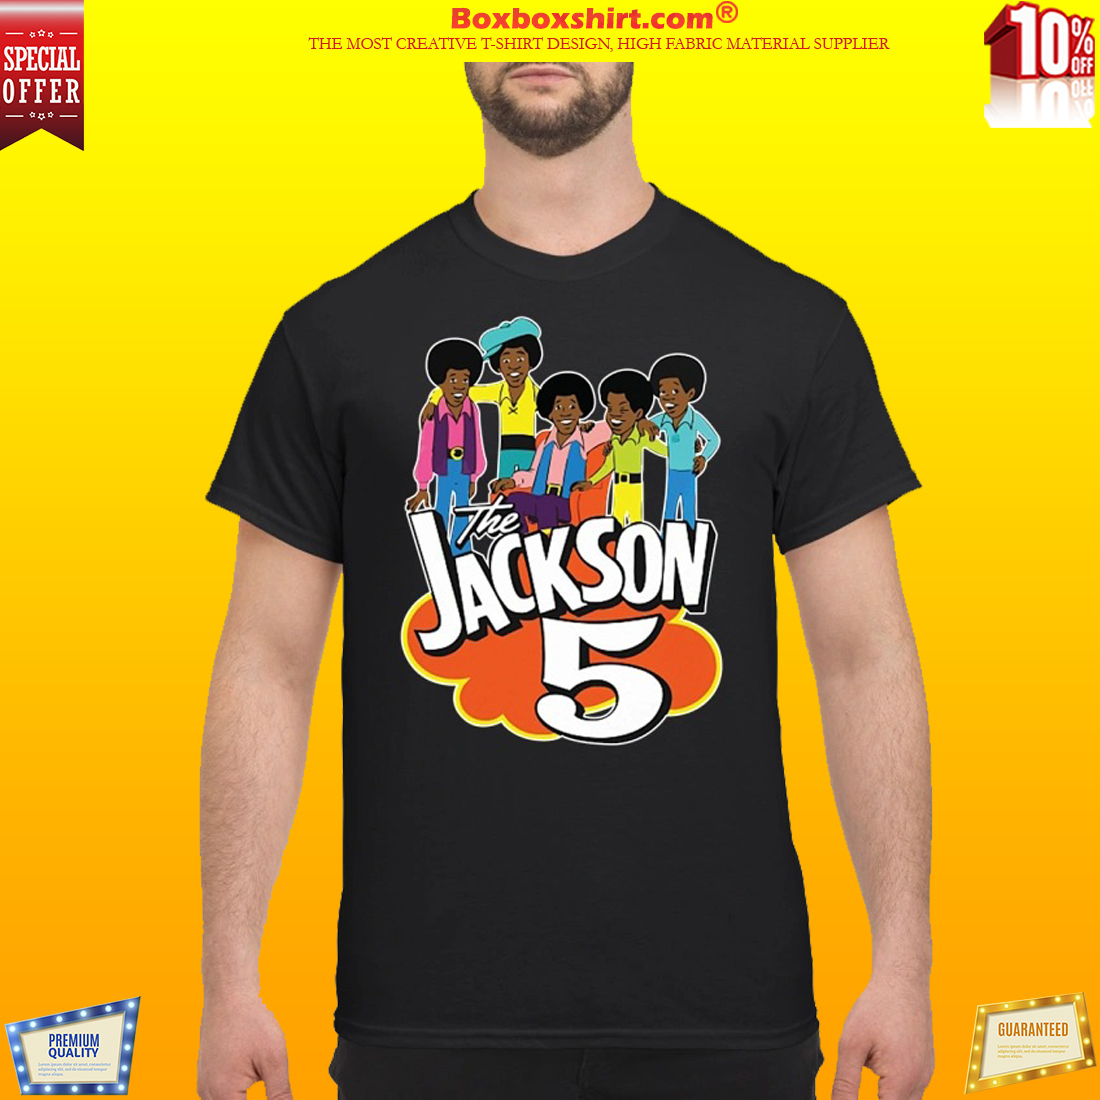 The Jackson 5 cartoon vintage retro t shirt